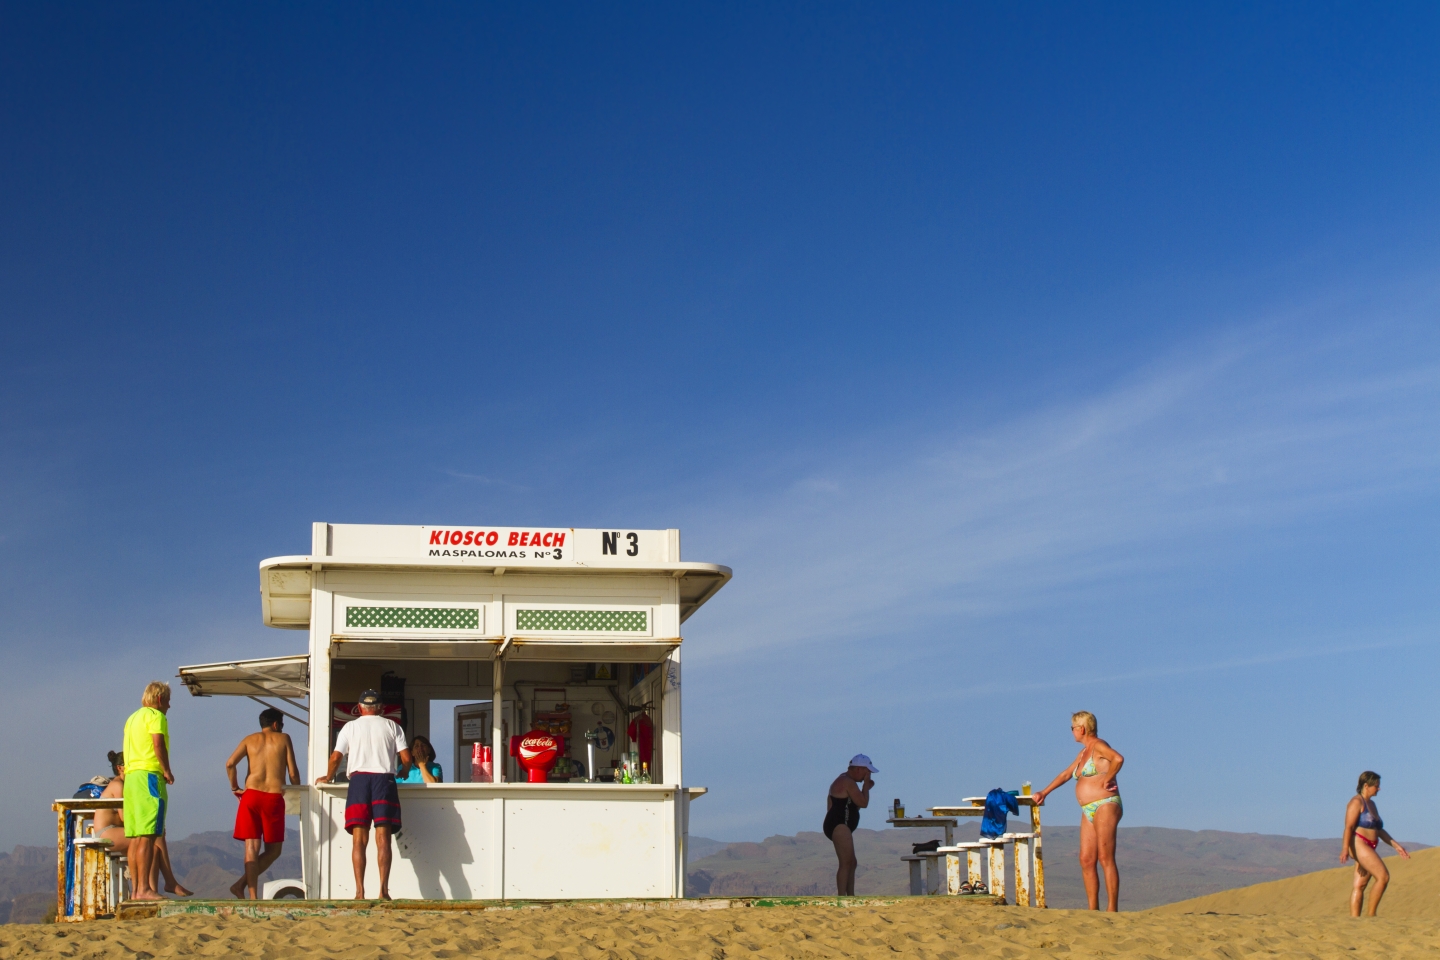 Playa del Inglés beach guide. nudist kiosk at Maspalomas beach. 